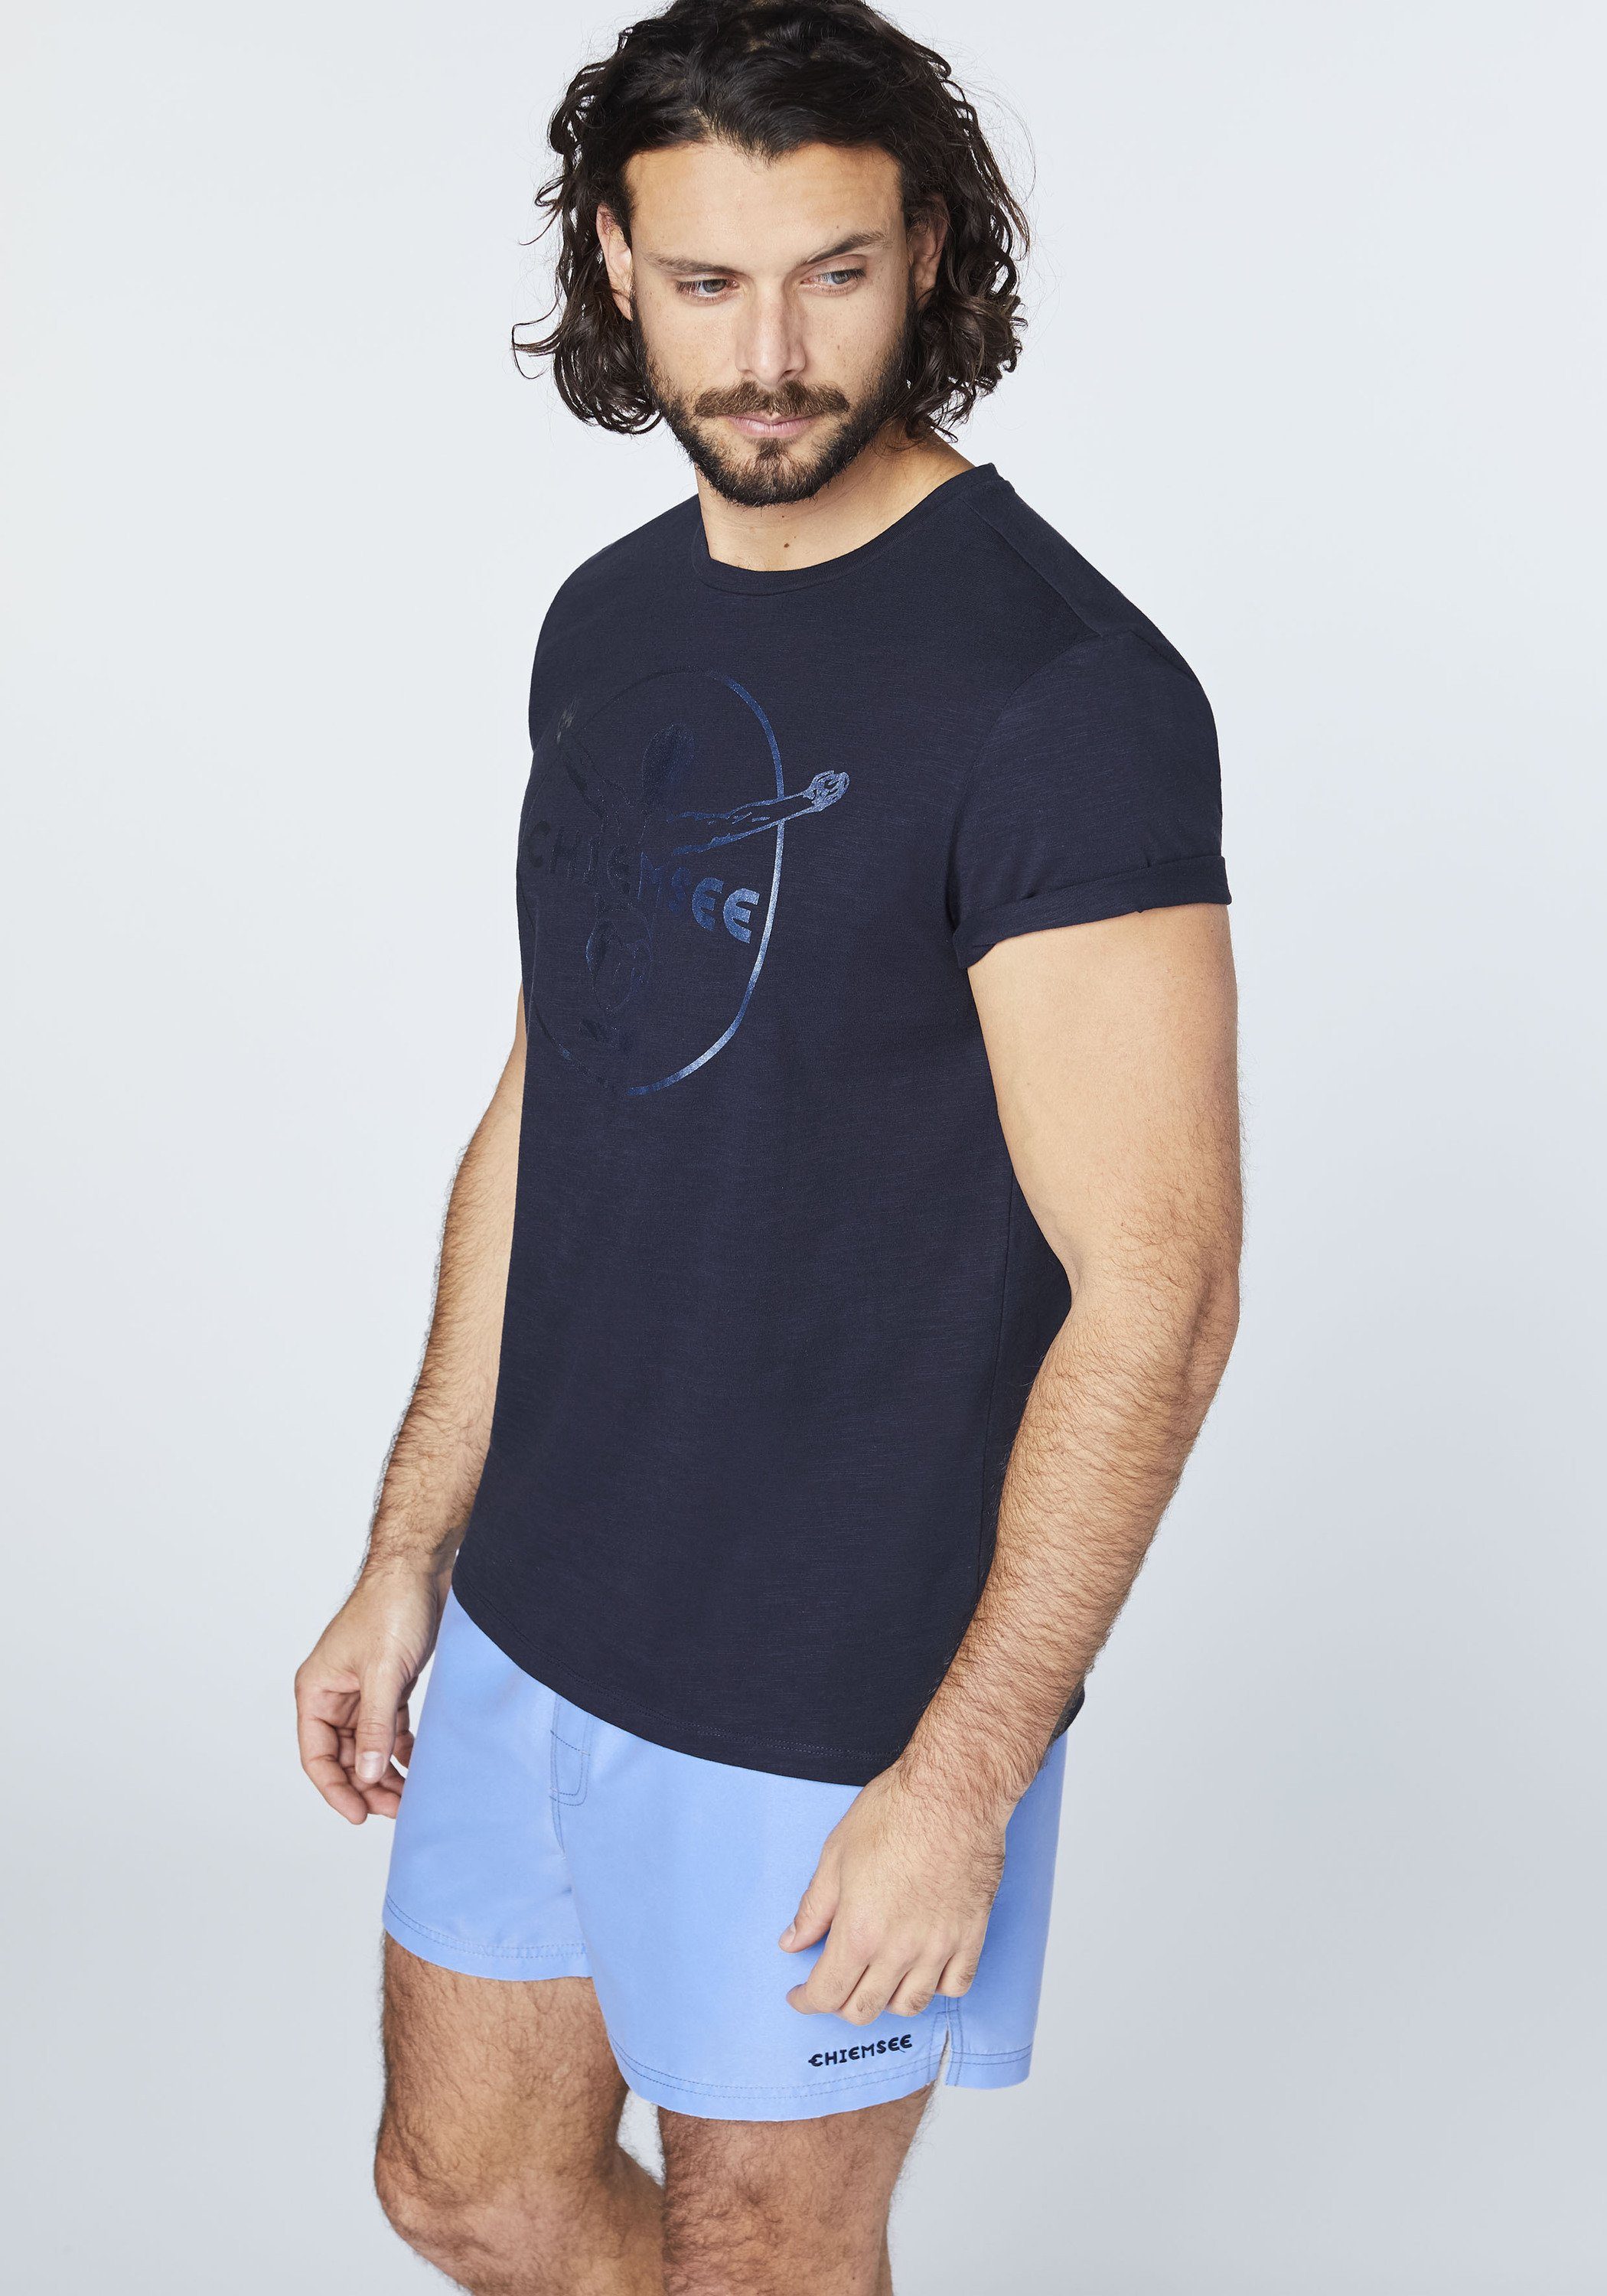 Sky mit Chiemsee T-Shirt Label-Symbol Night Print-Shirt 1 gedrucktem